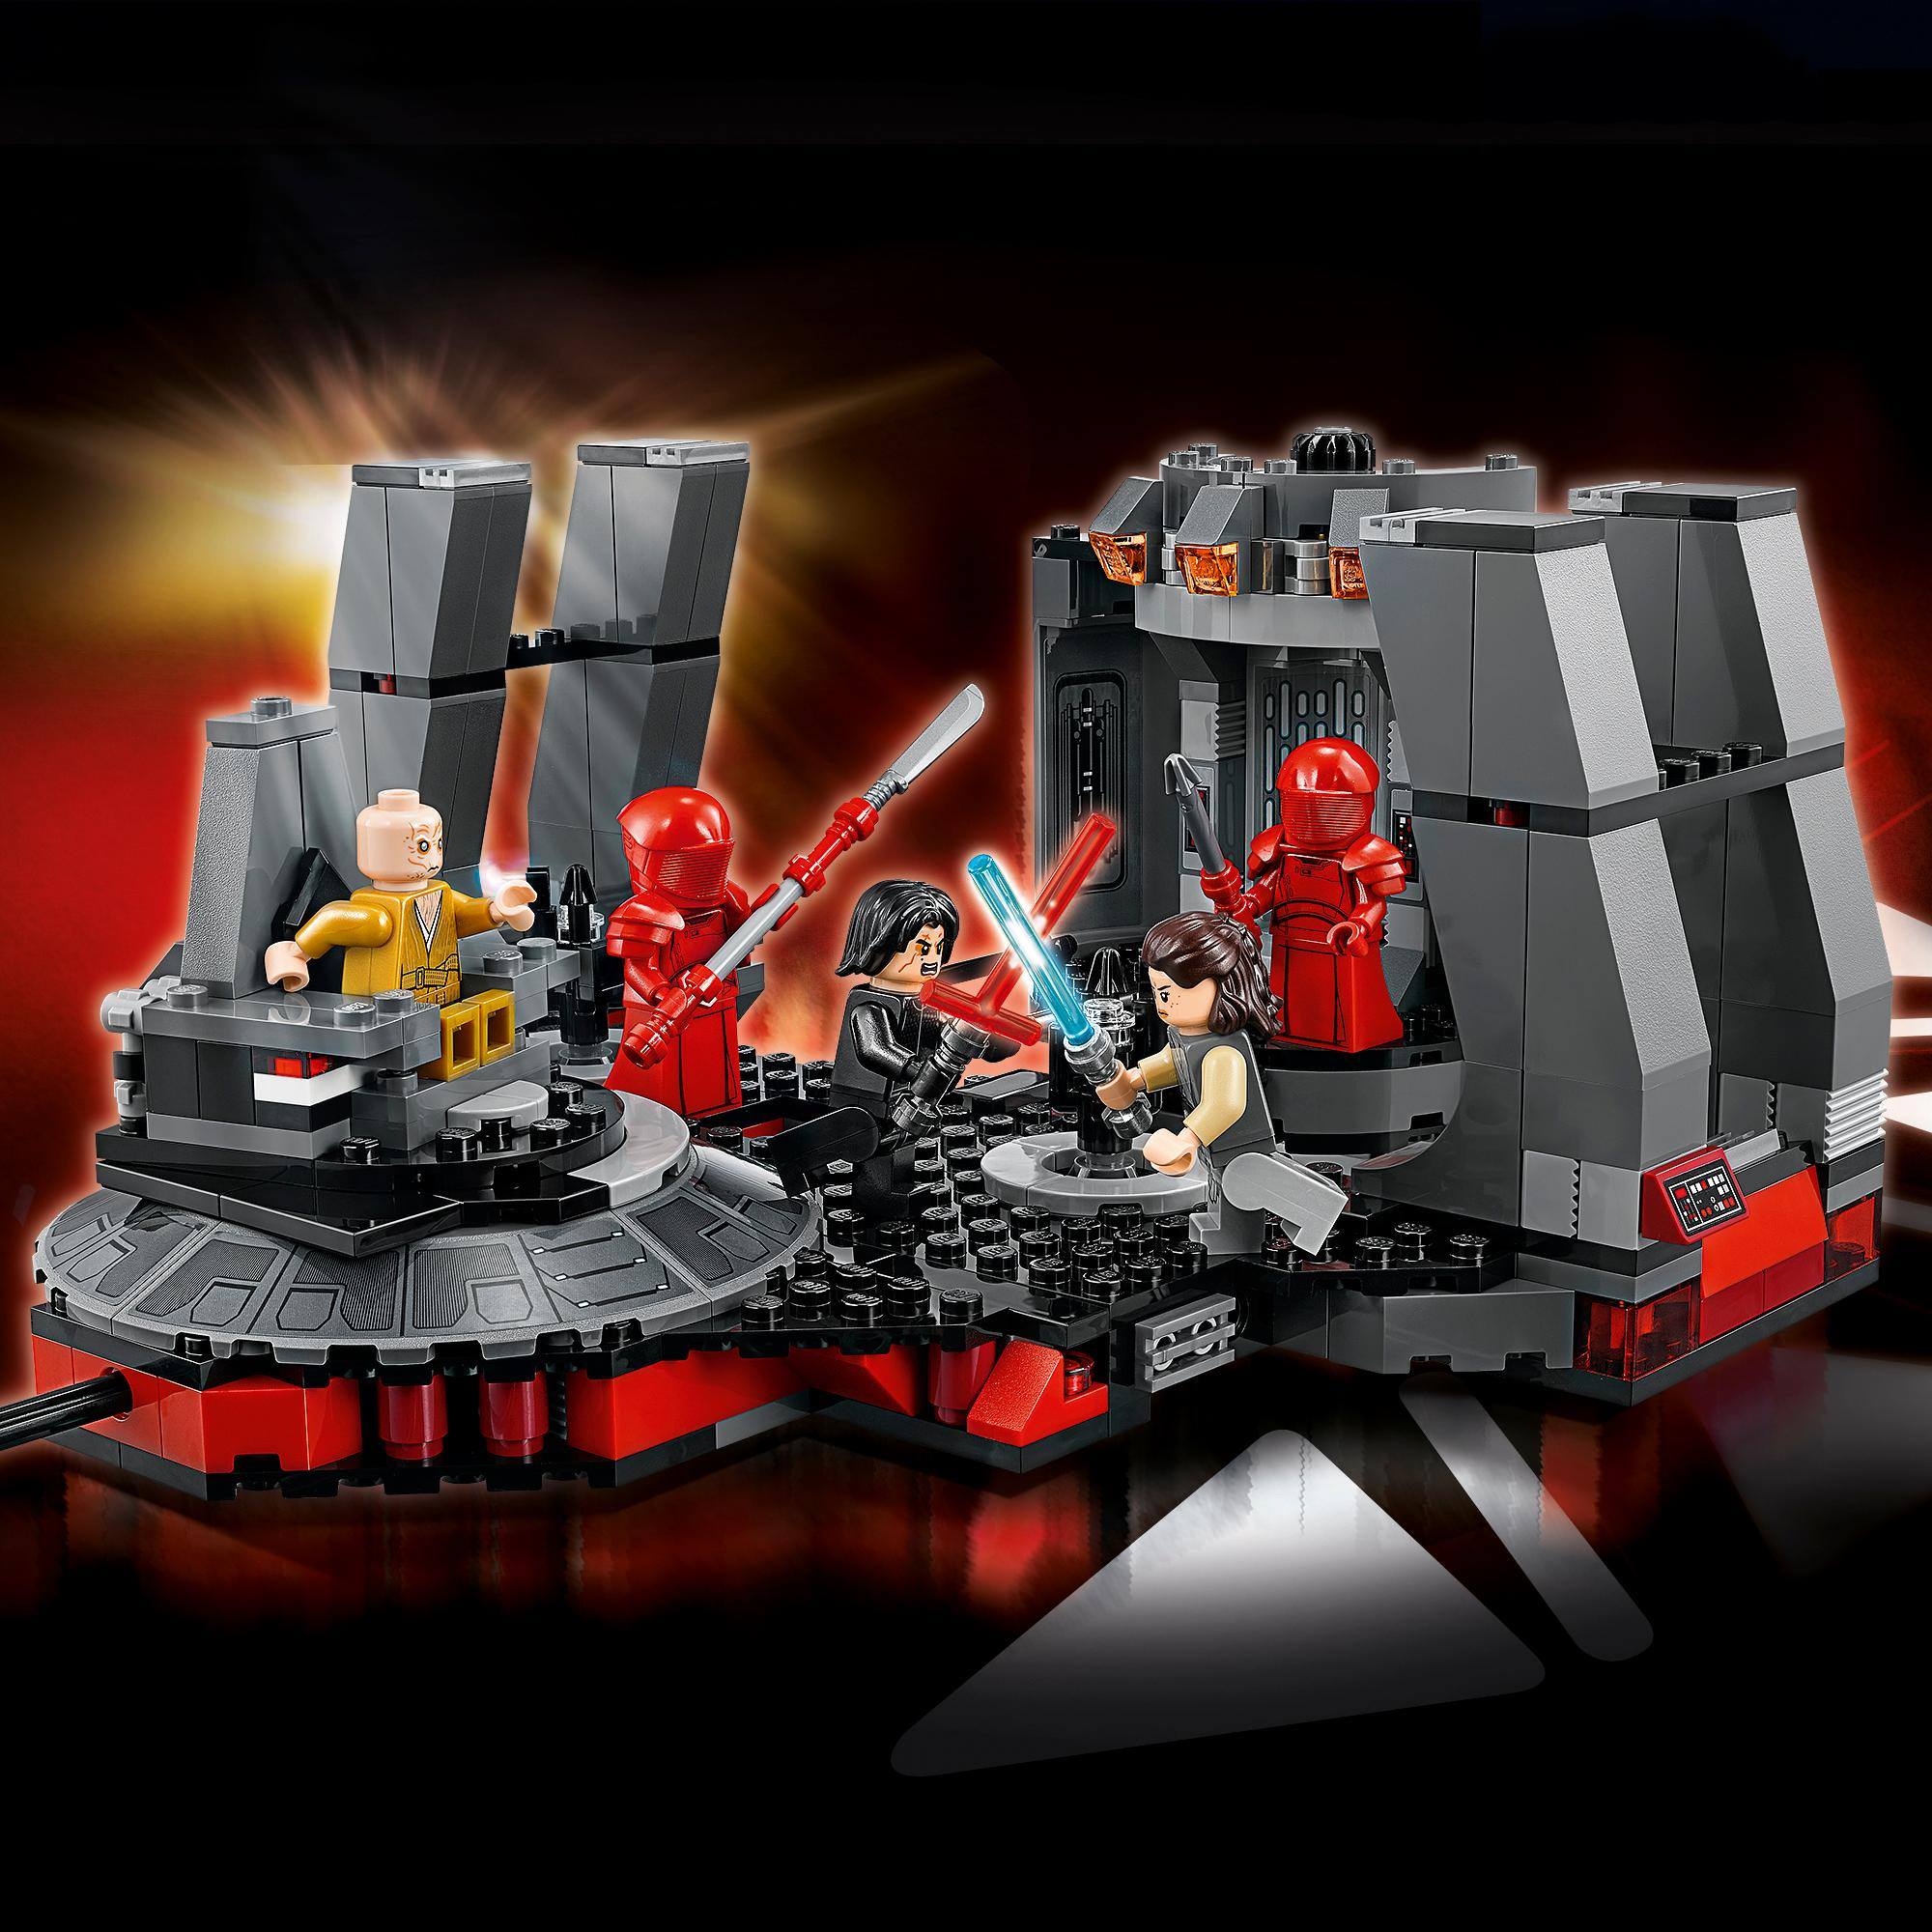 Lego star wars sets